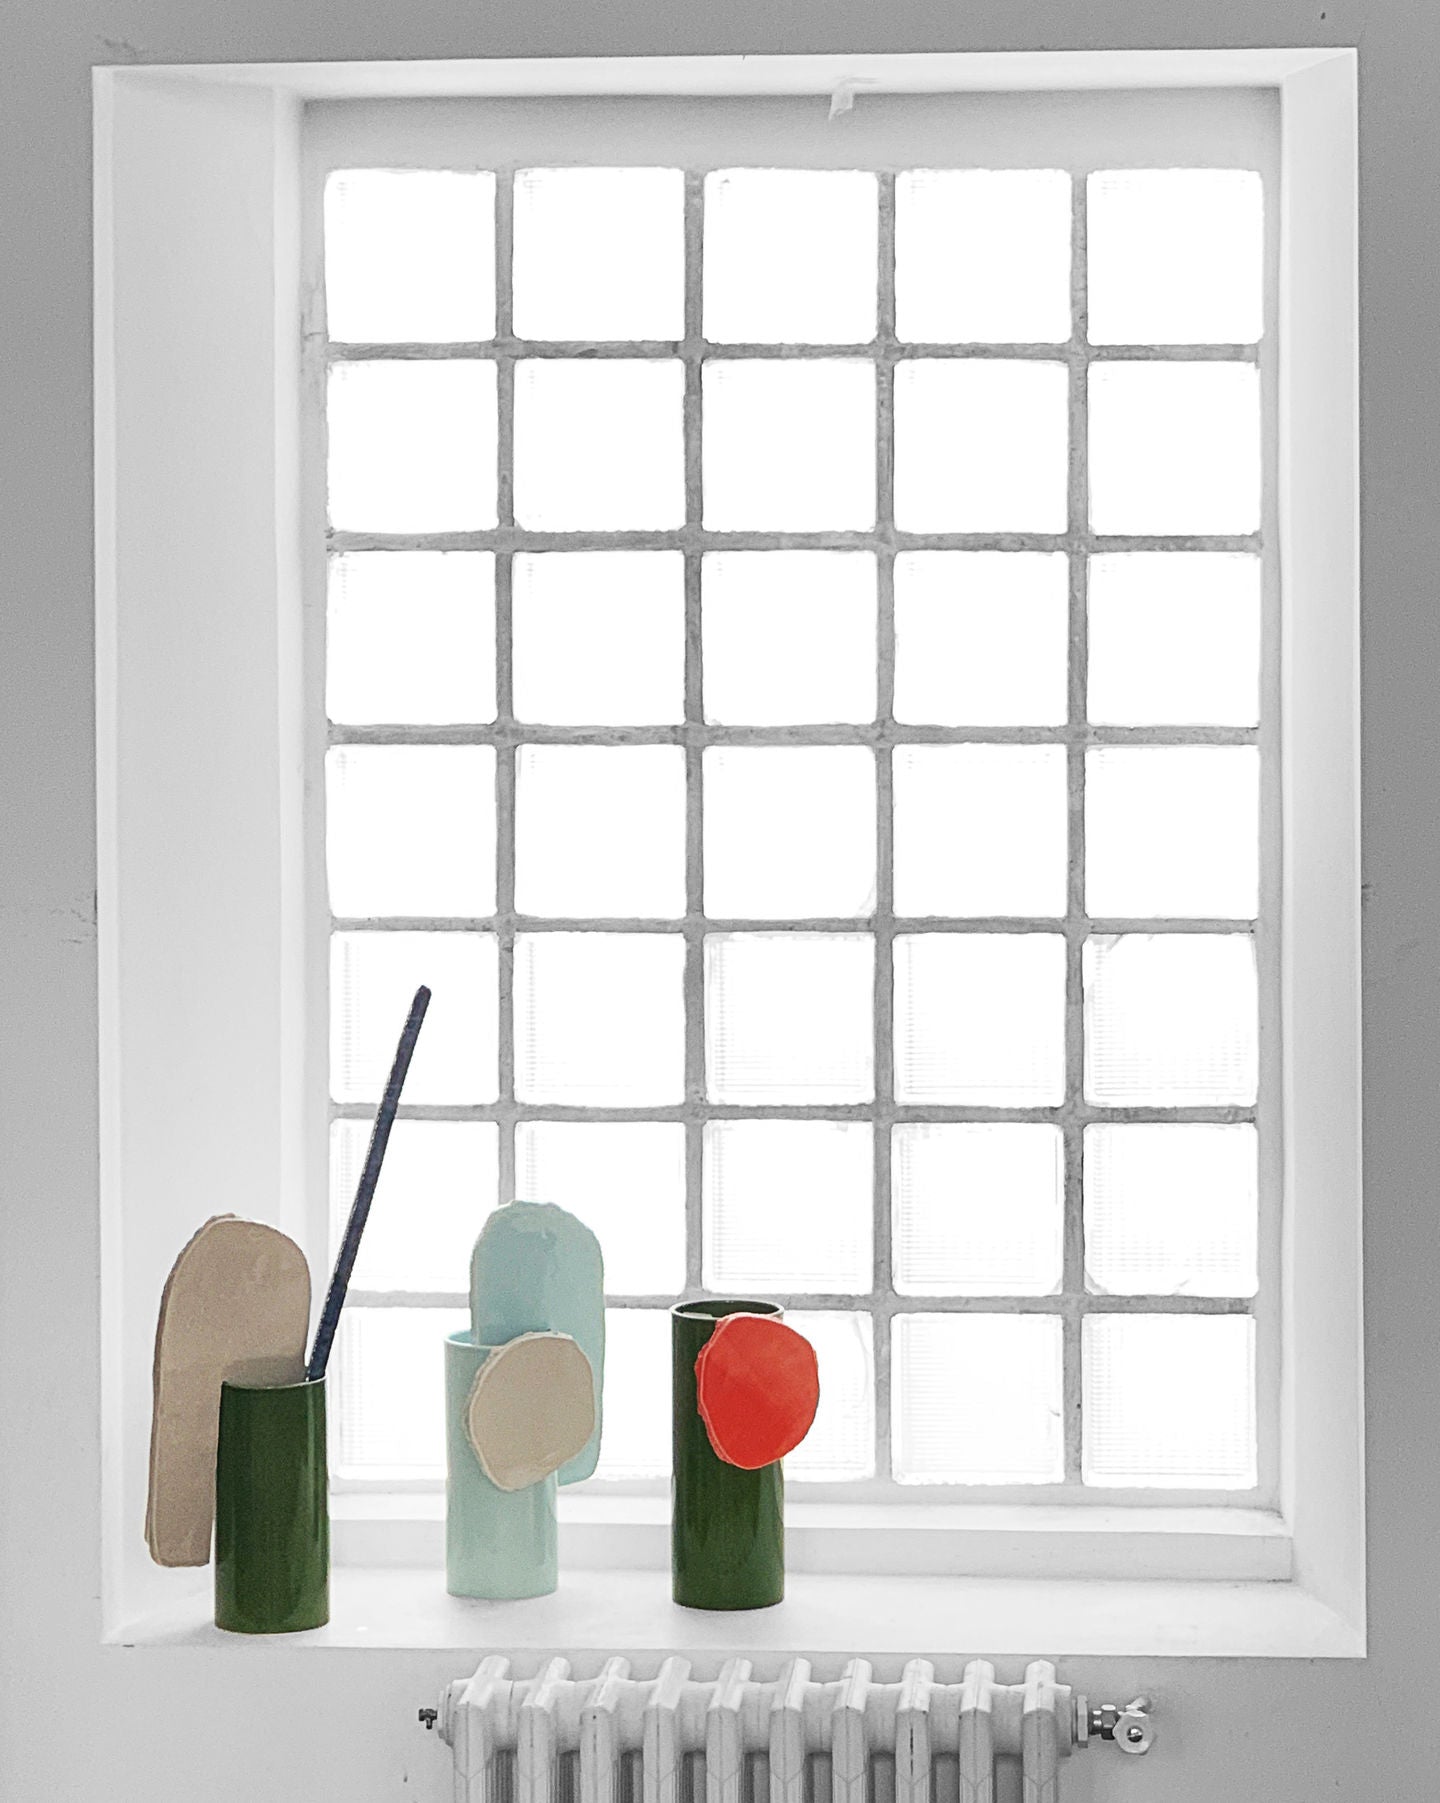 Vases Découpage, by Ronan & Erwan Bouroullec, 2020